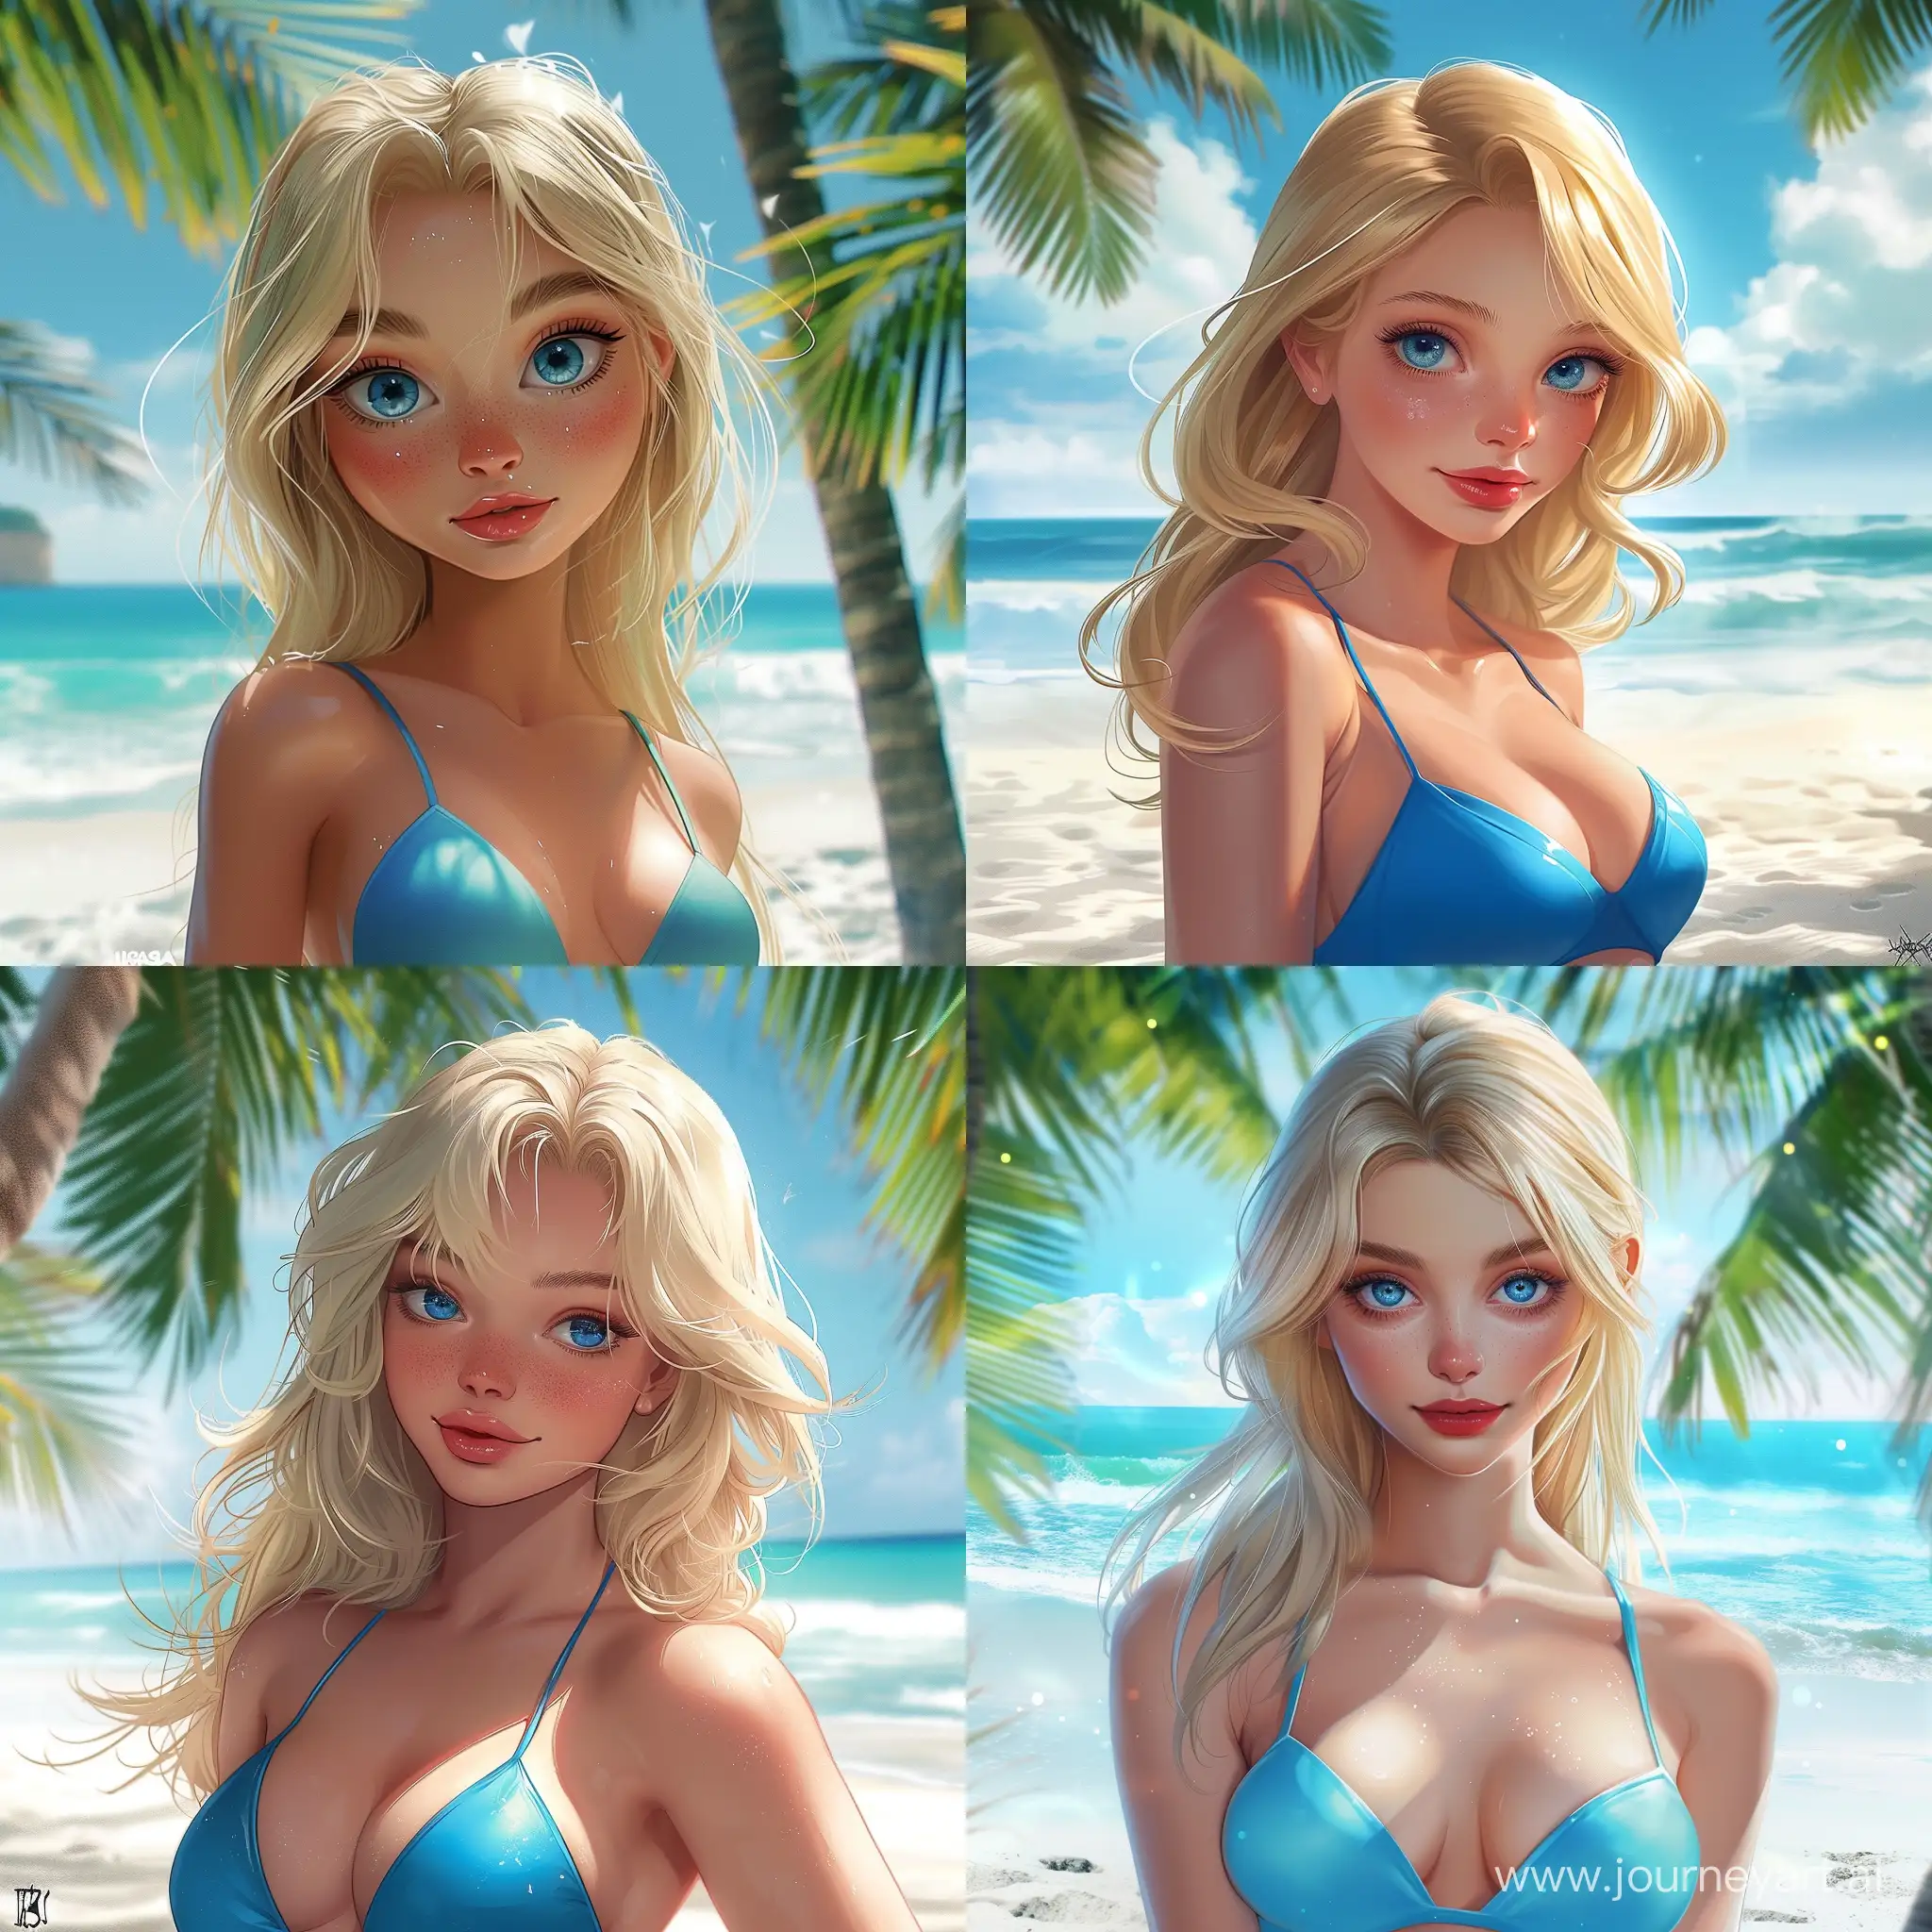 Stunning-Blonde-Beach-Beauty-in-Blue-Swimsuit